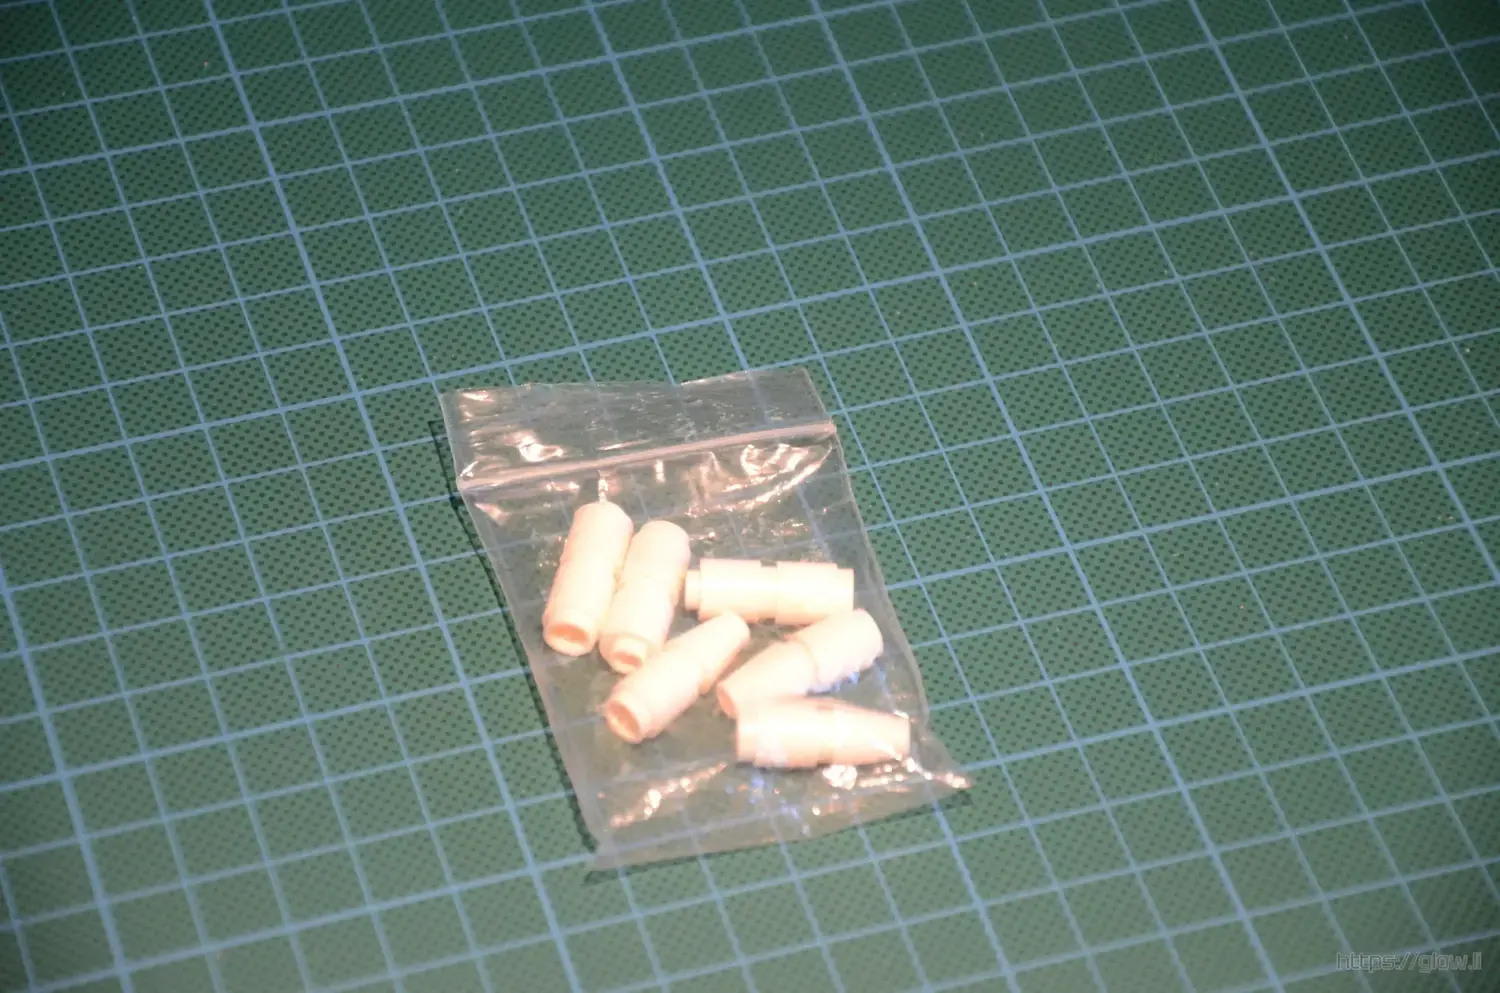 Lego Pills